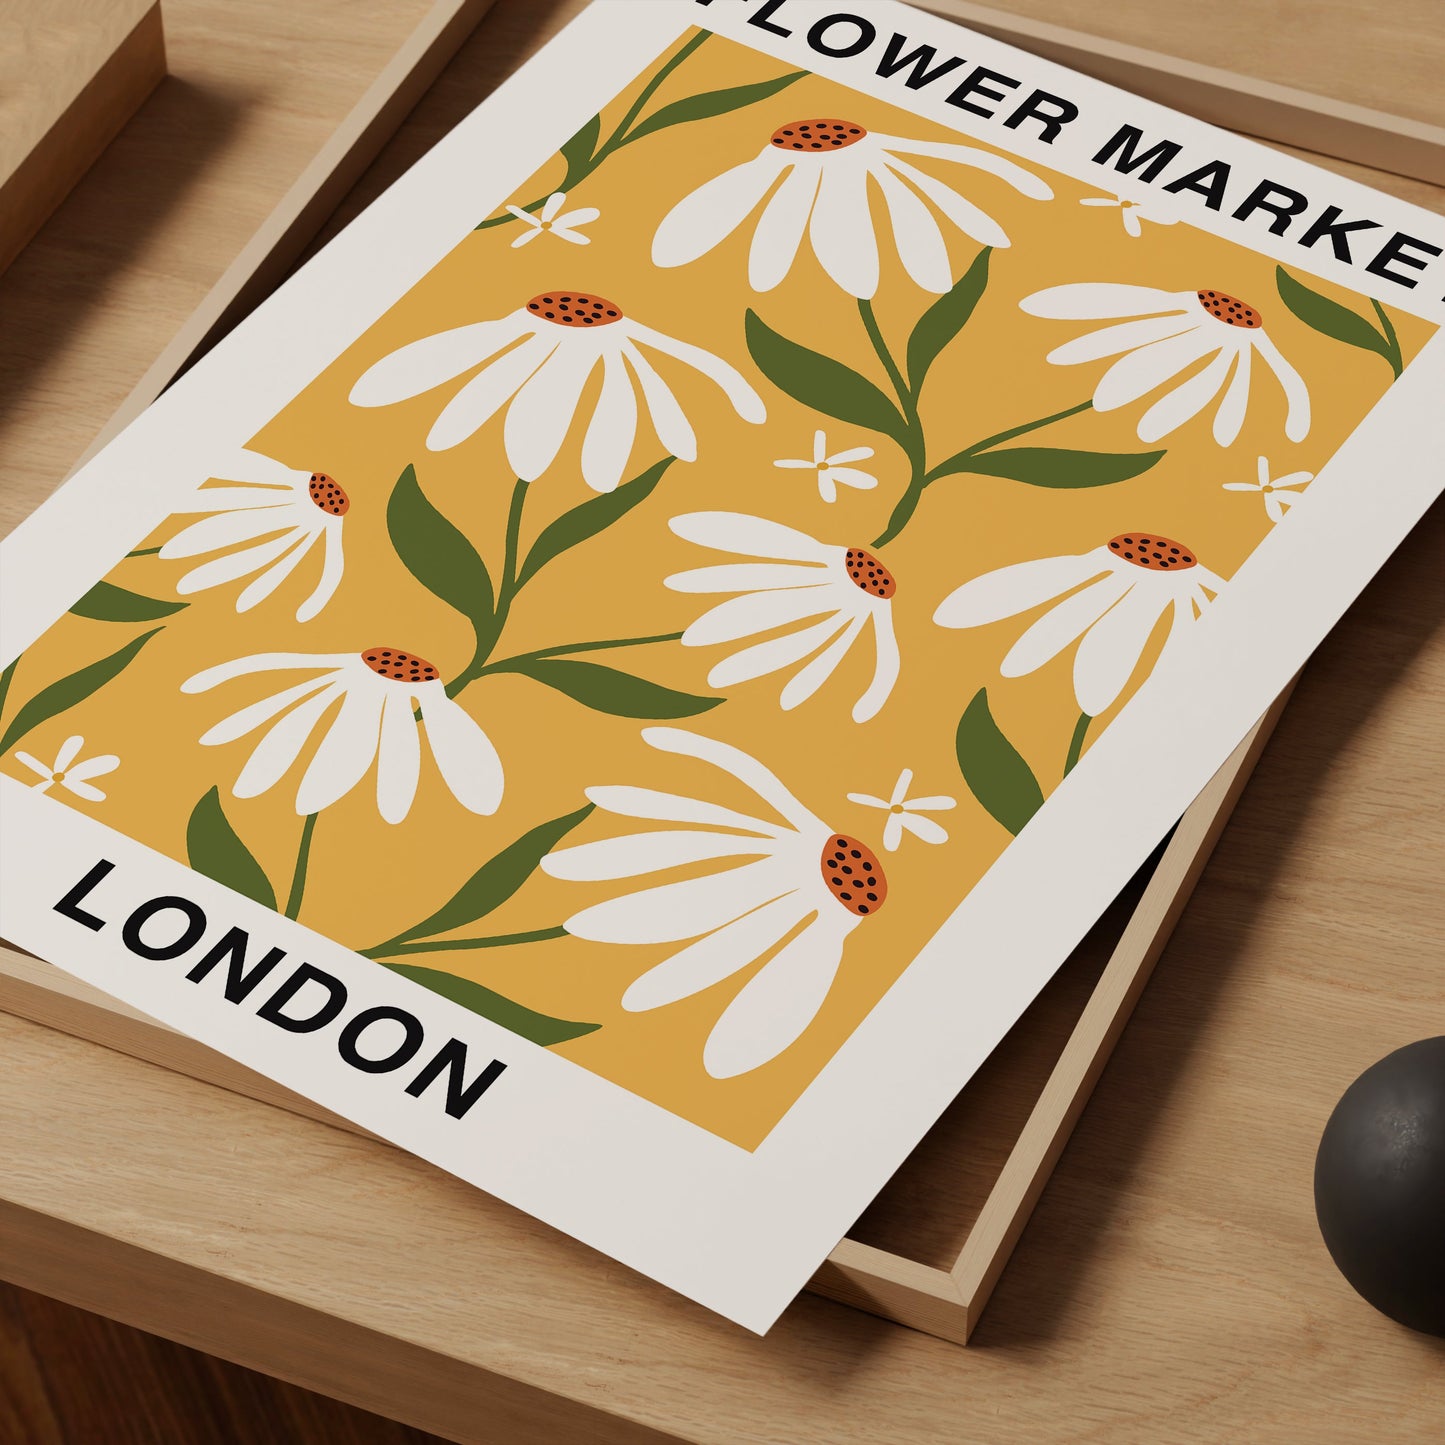 a flower make london poster sitting on a desk